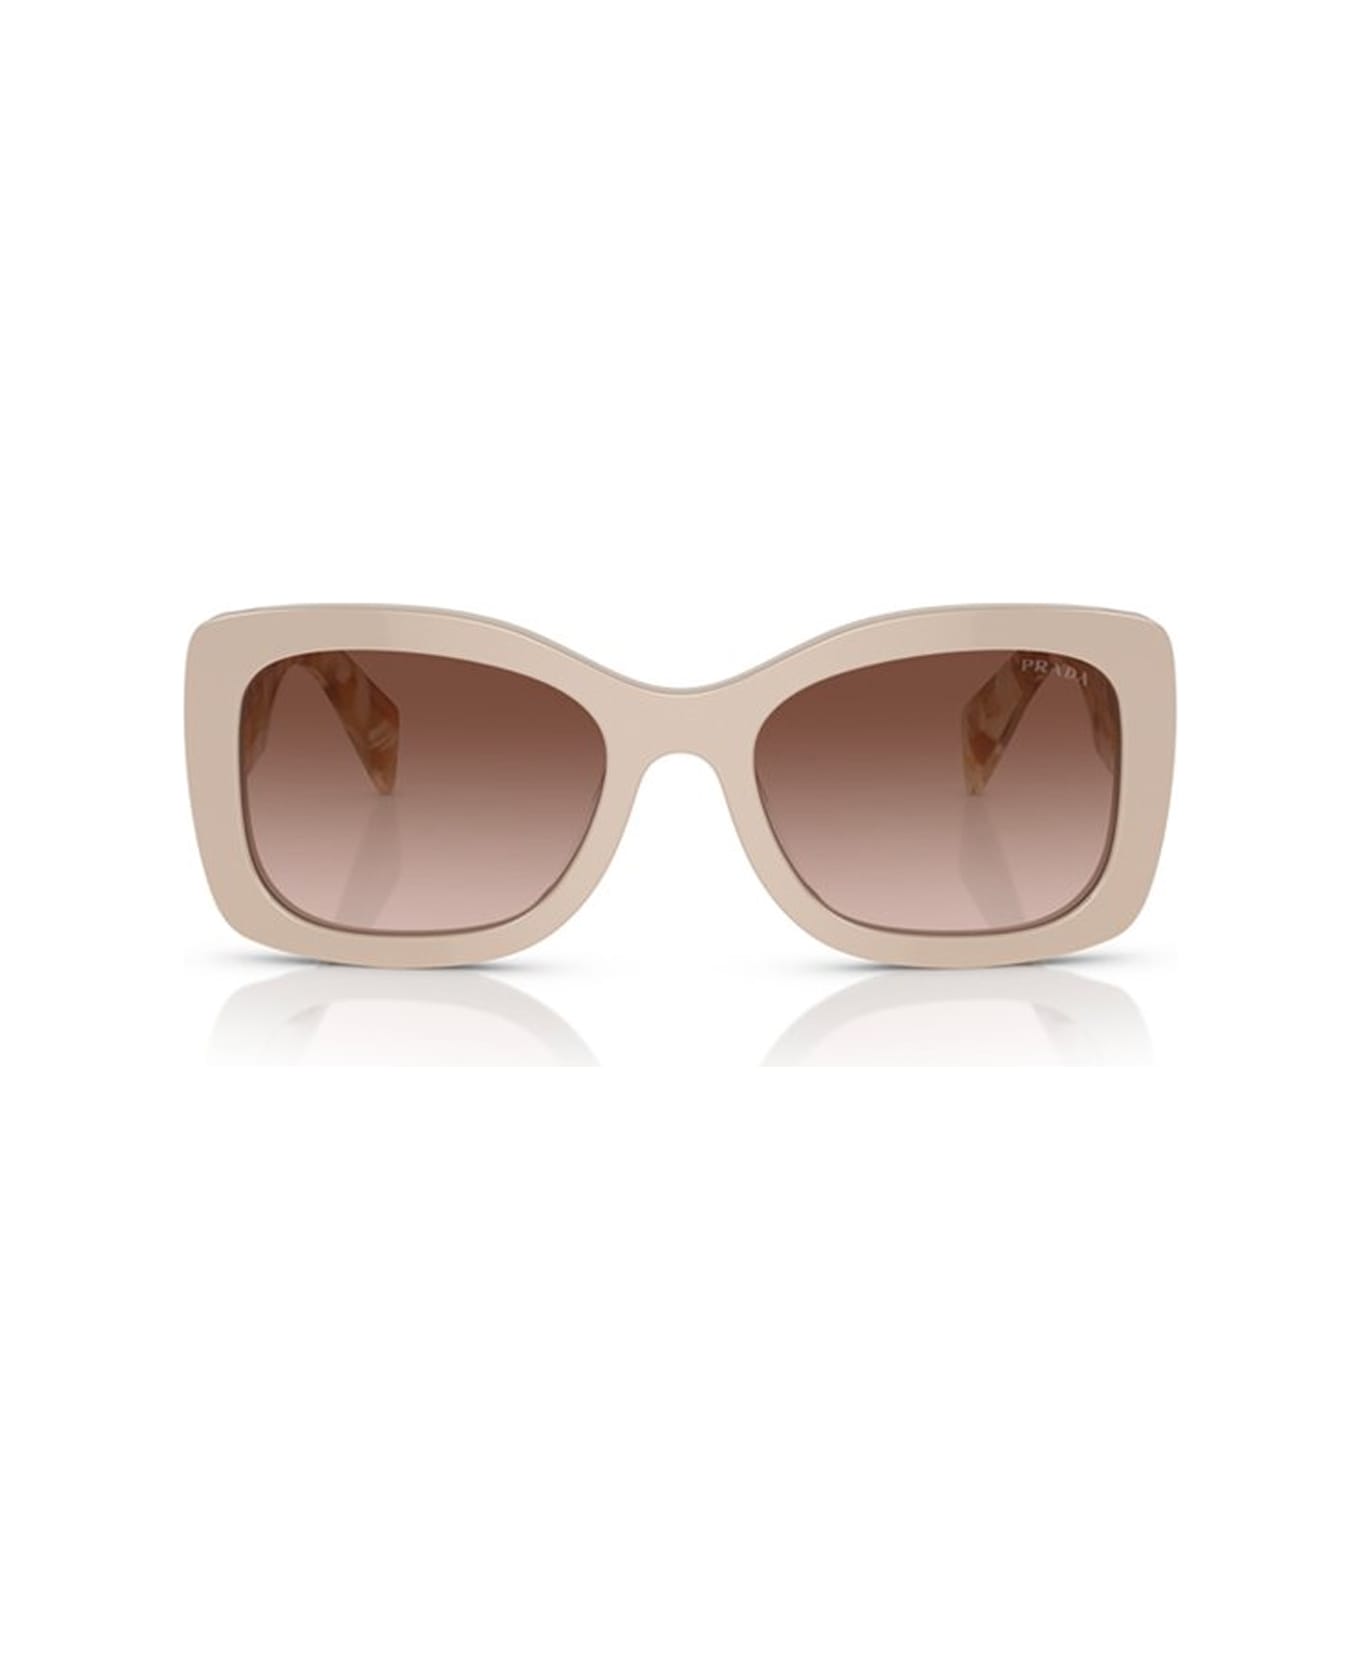 Prada Eyewear Pra08s 11o6s1 Sunglasses - Beige